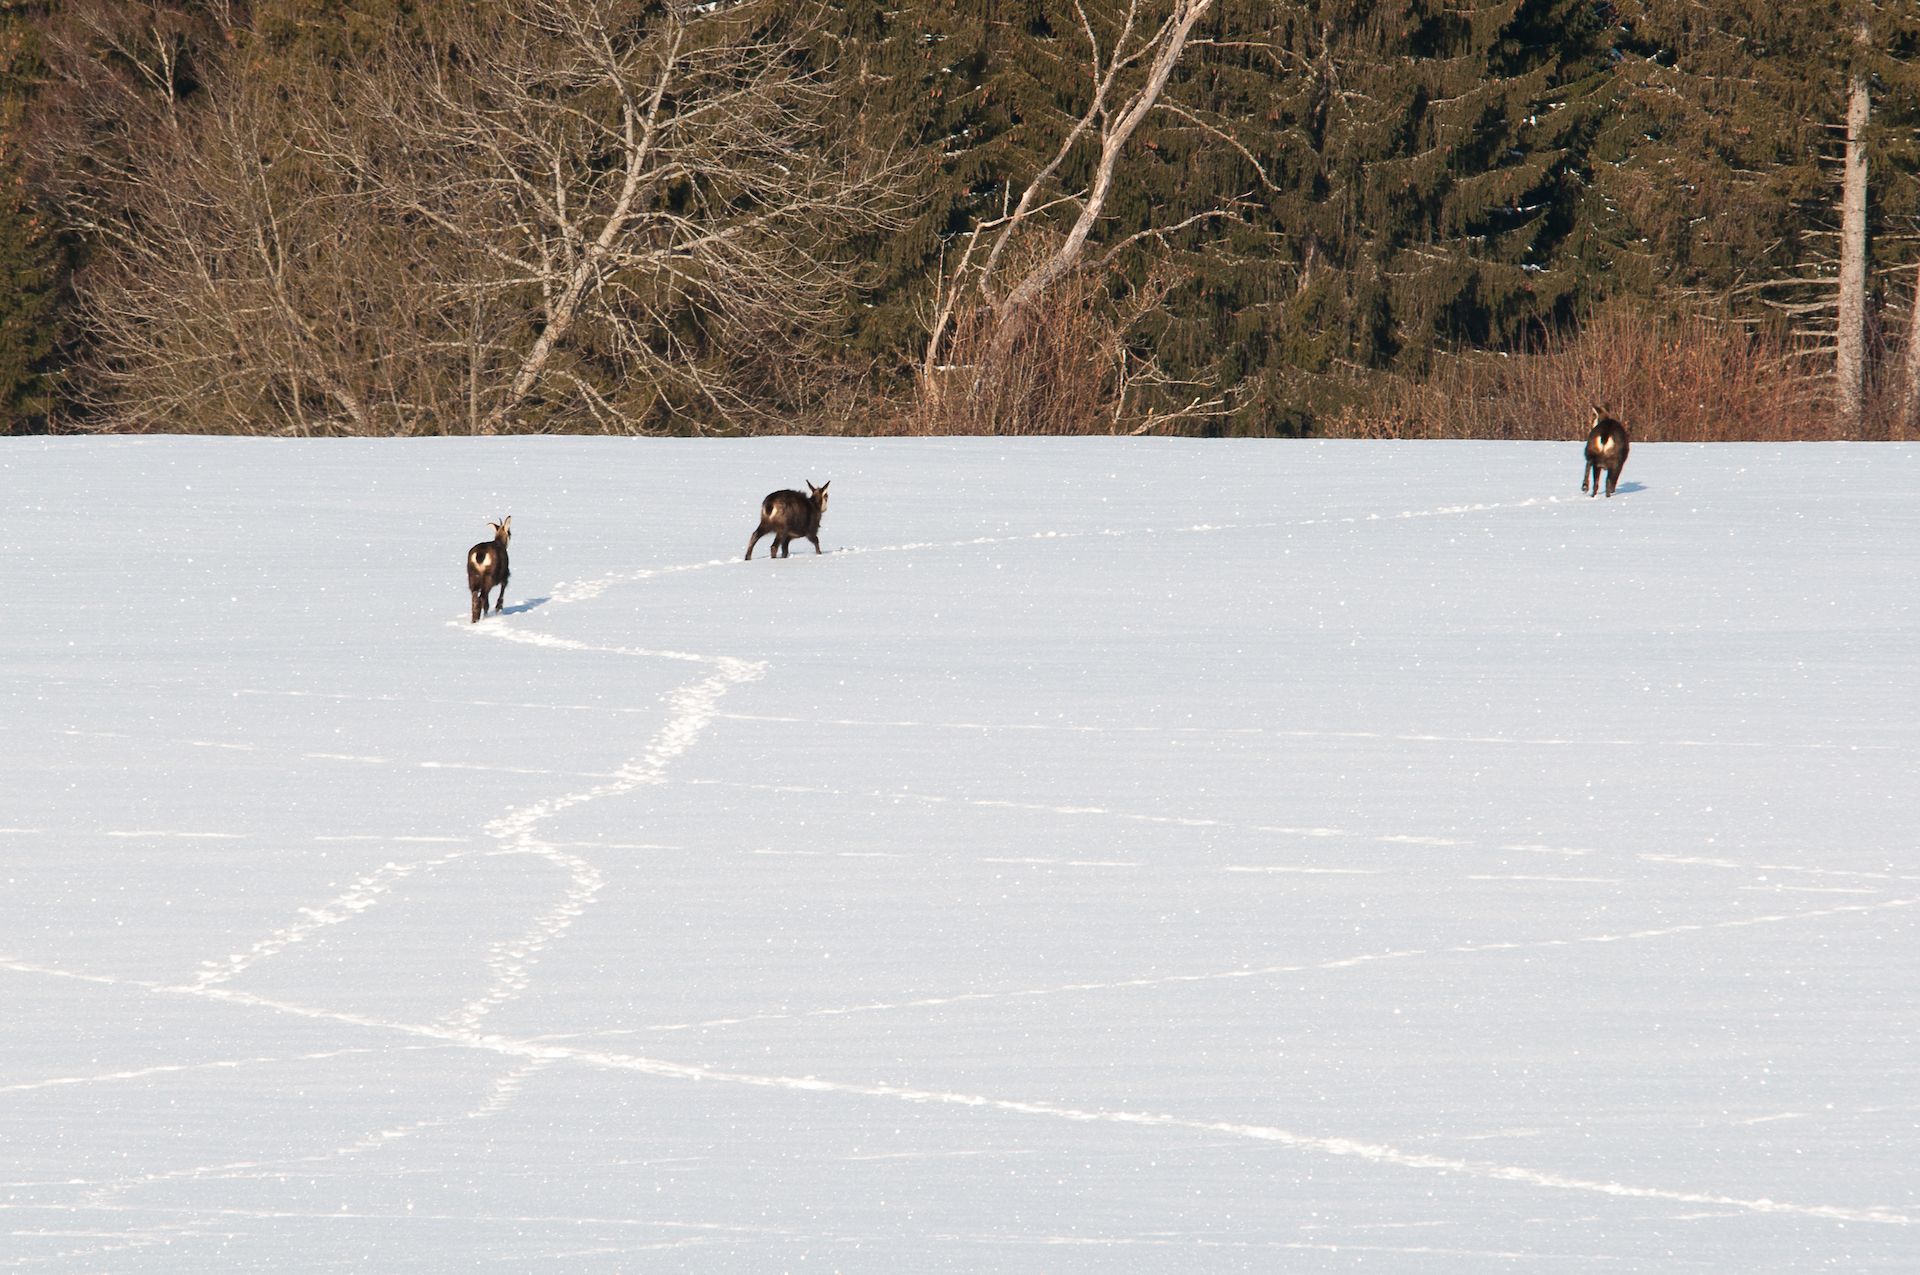 https://notrechalet.fr/uploads/2021/11/photos-ambiance-hivernal-animaux.jpg